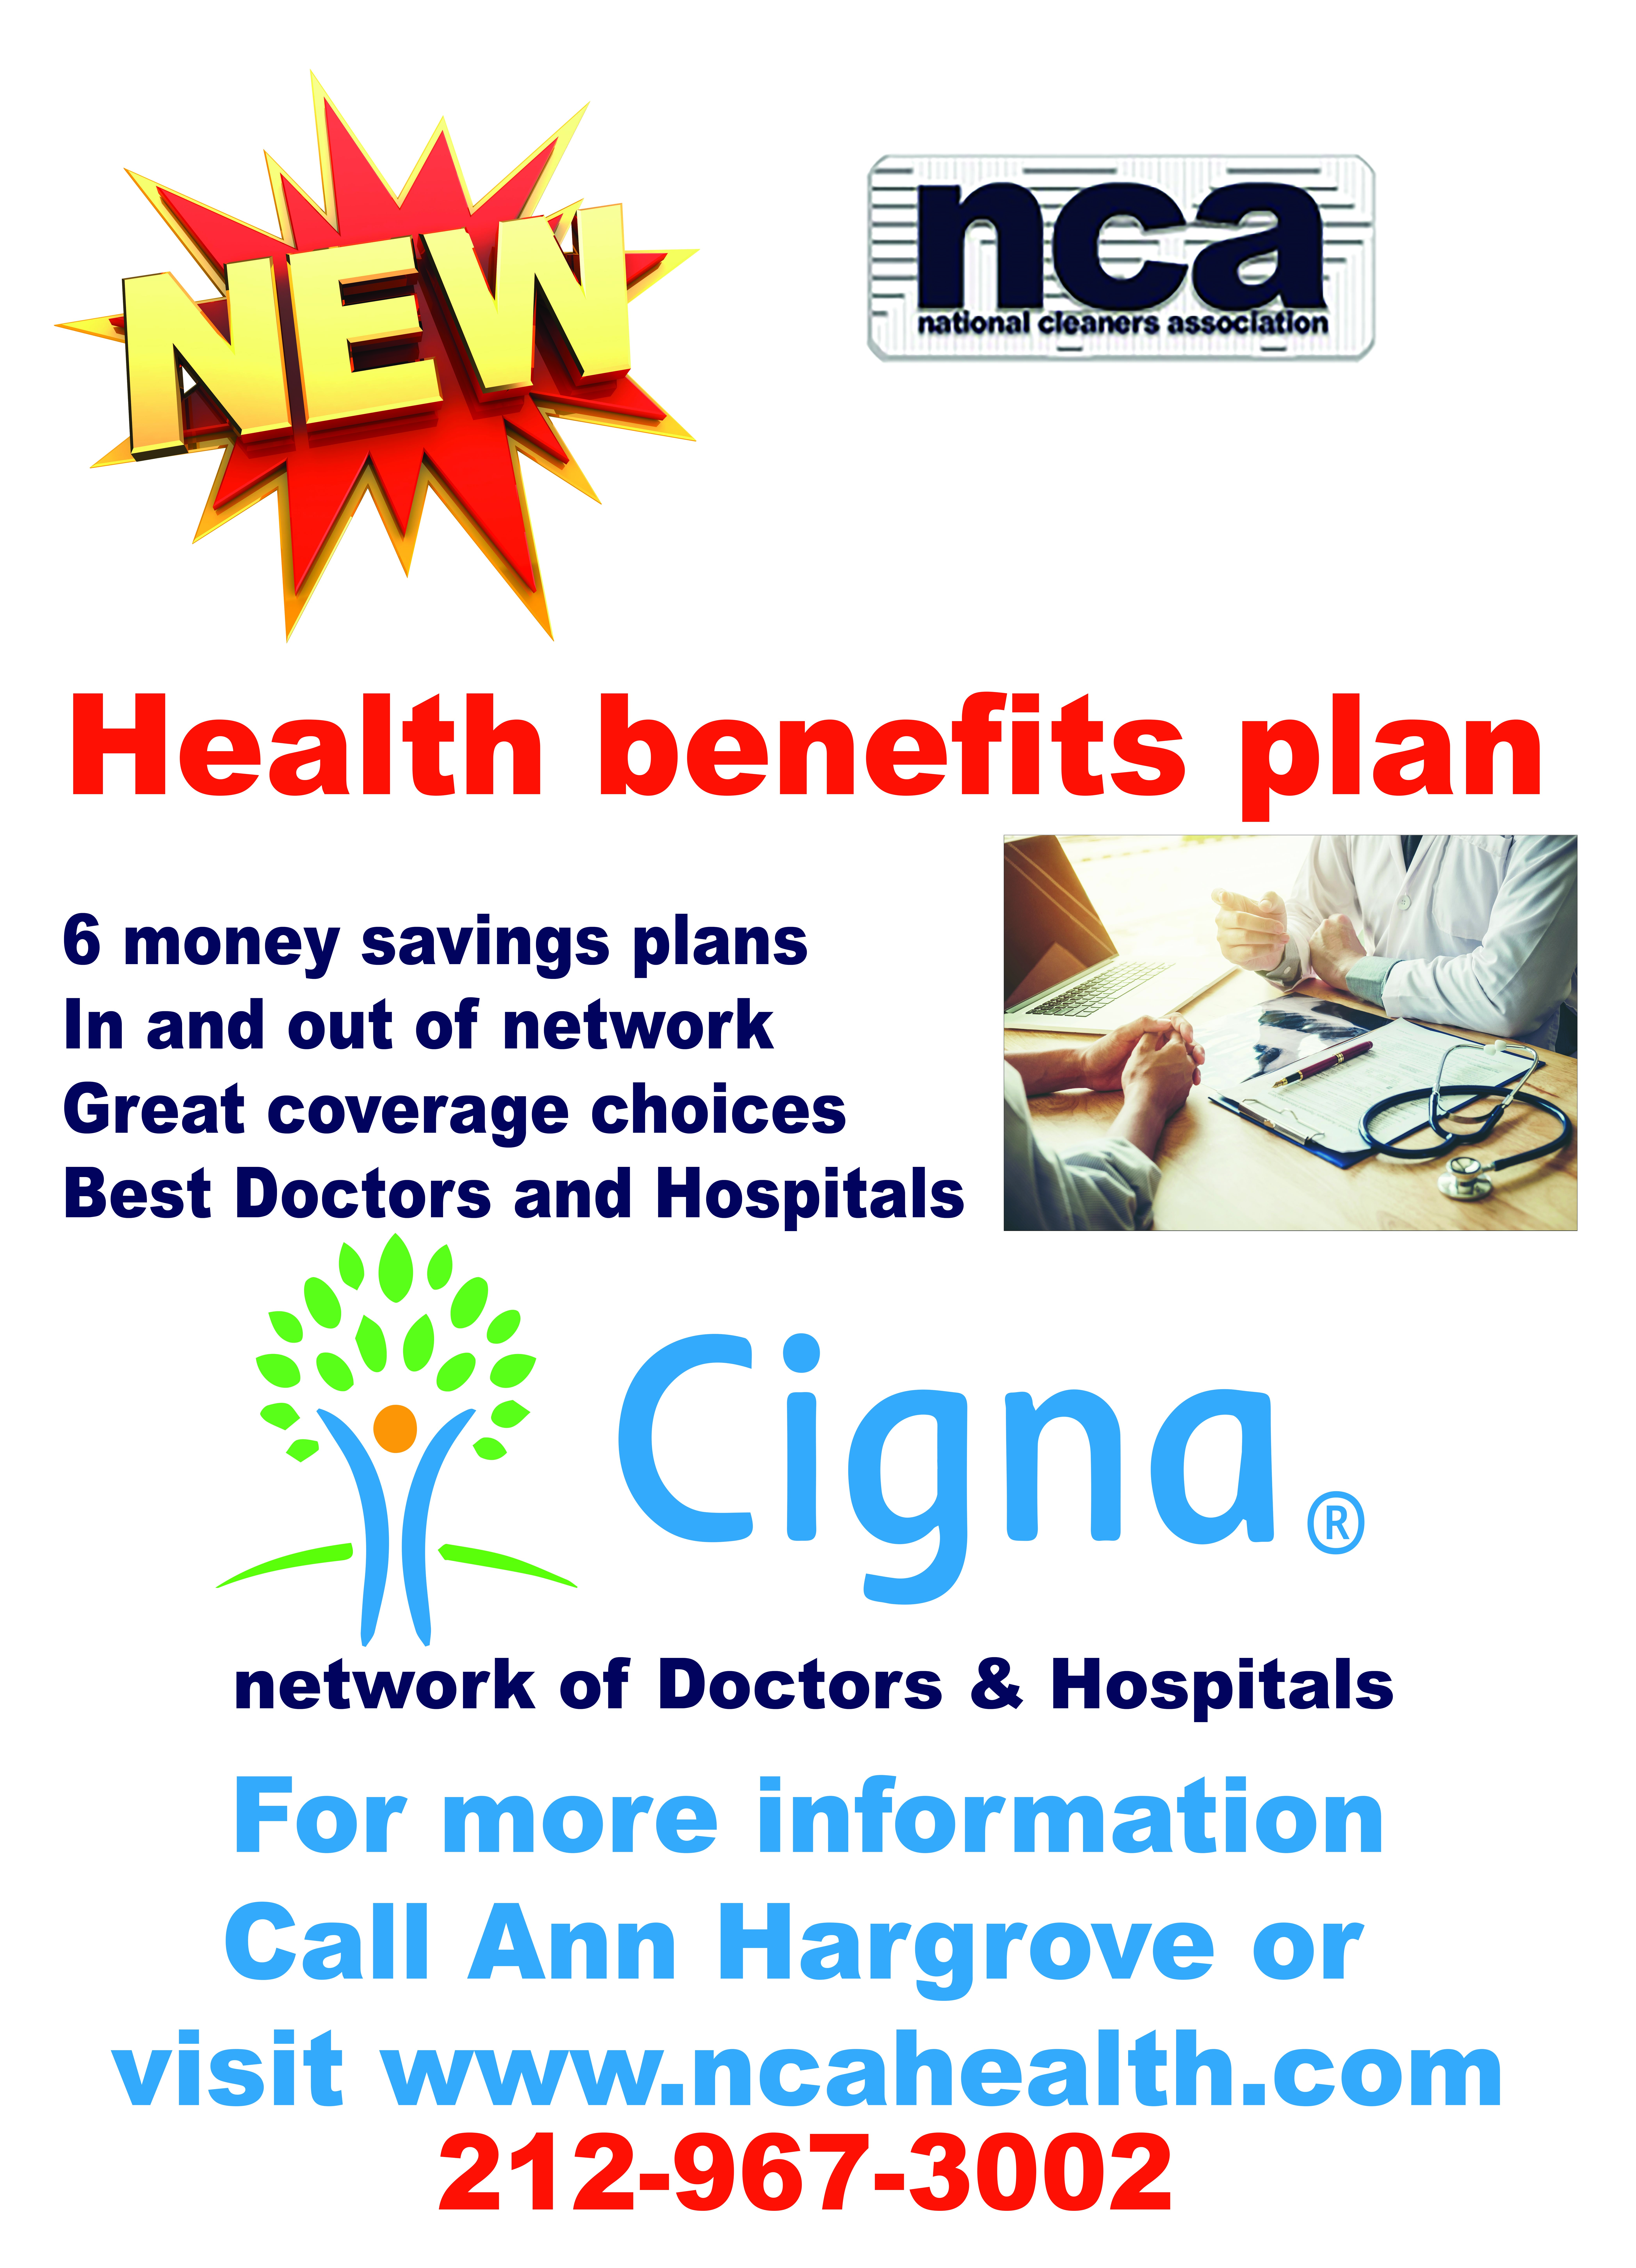 NCA Health plan information